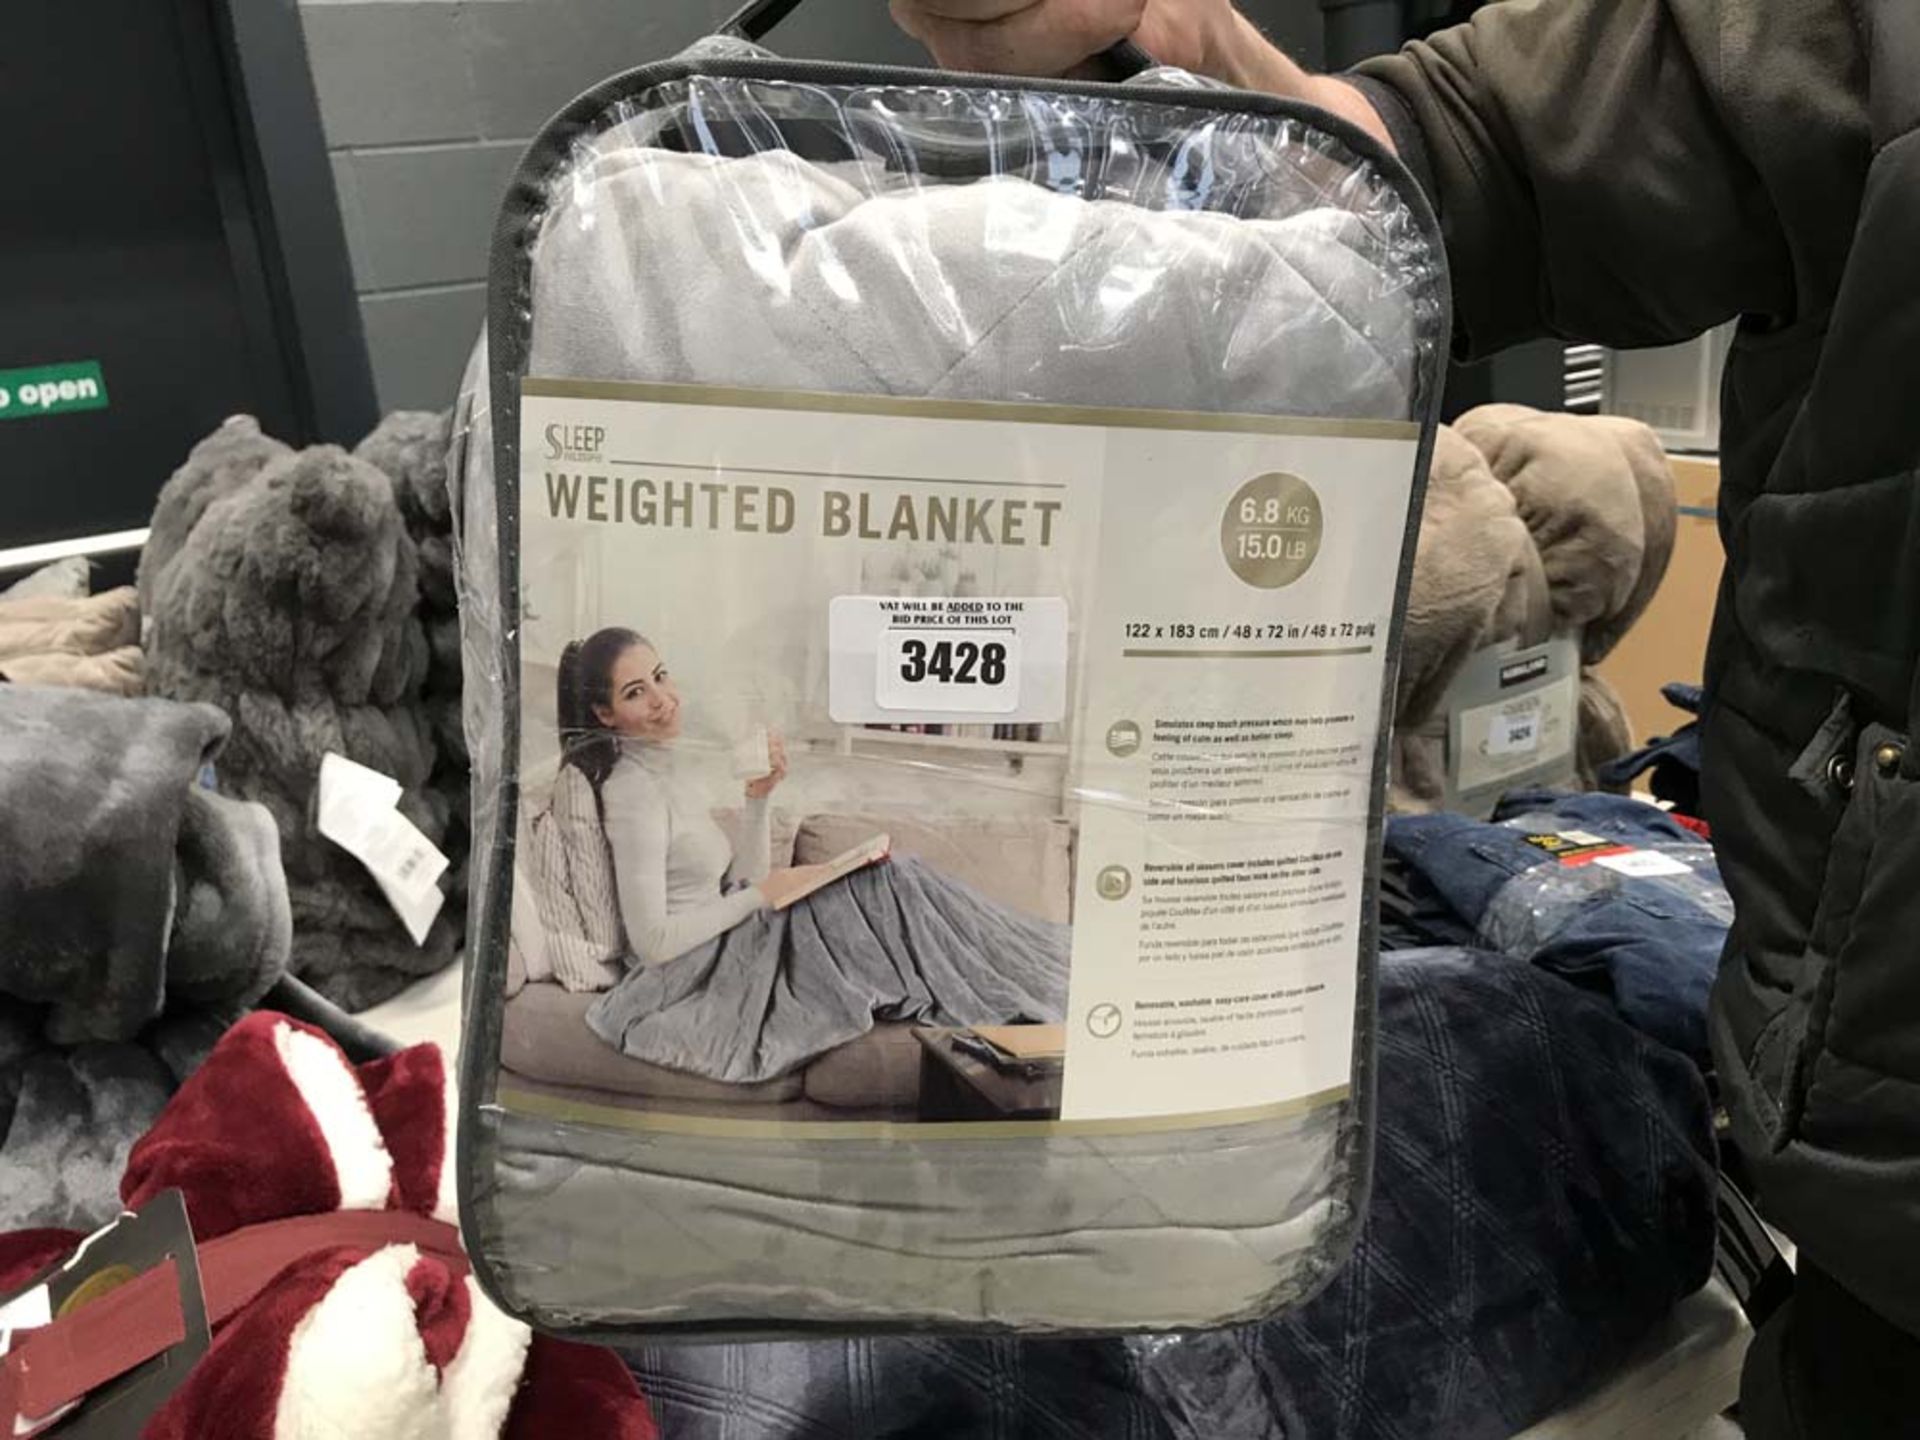 Sleep weighted blanket